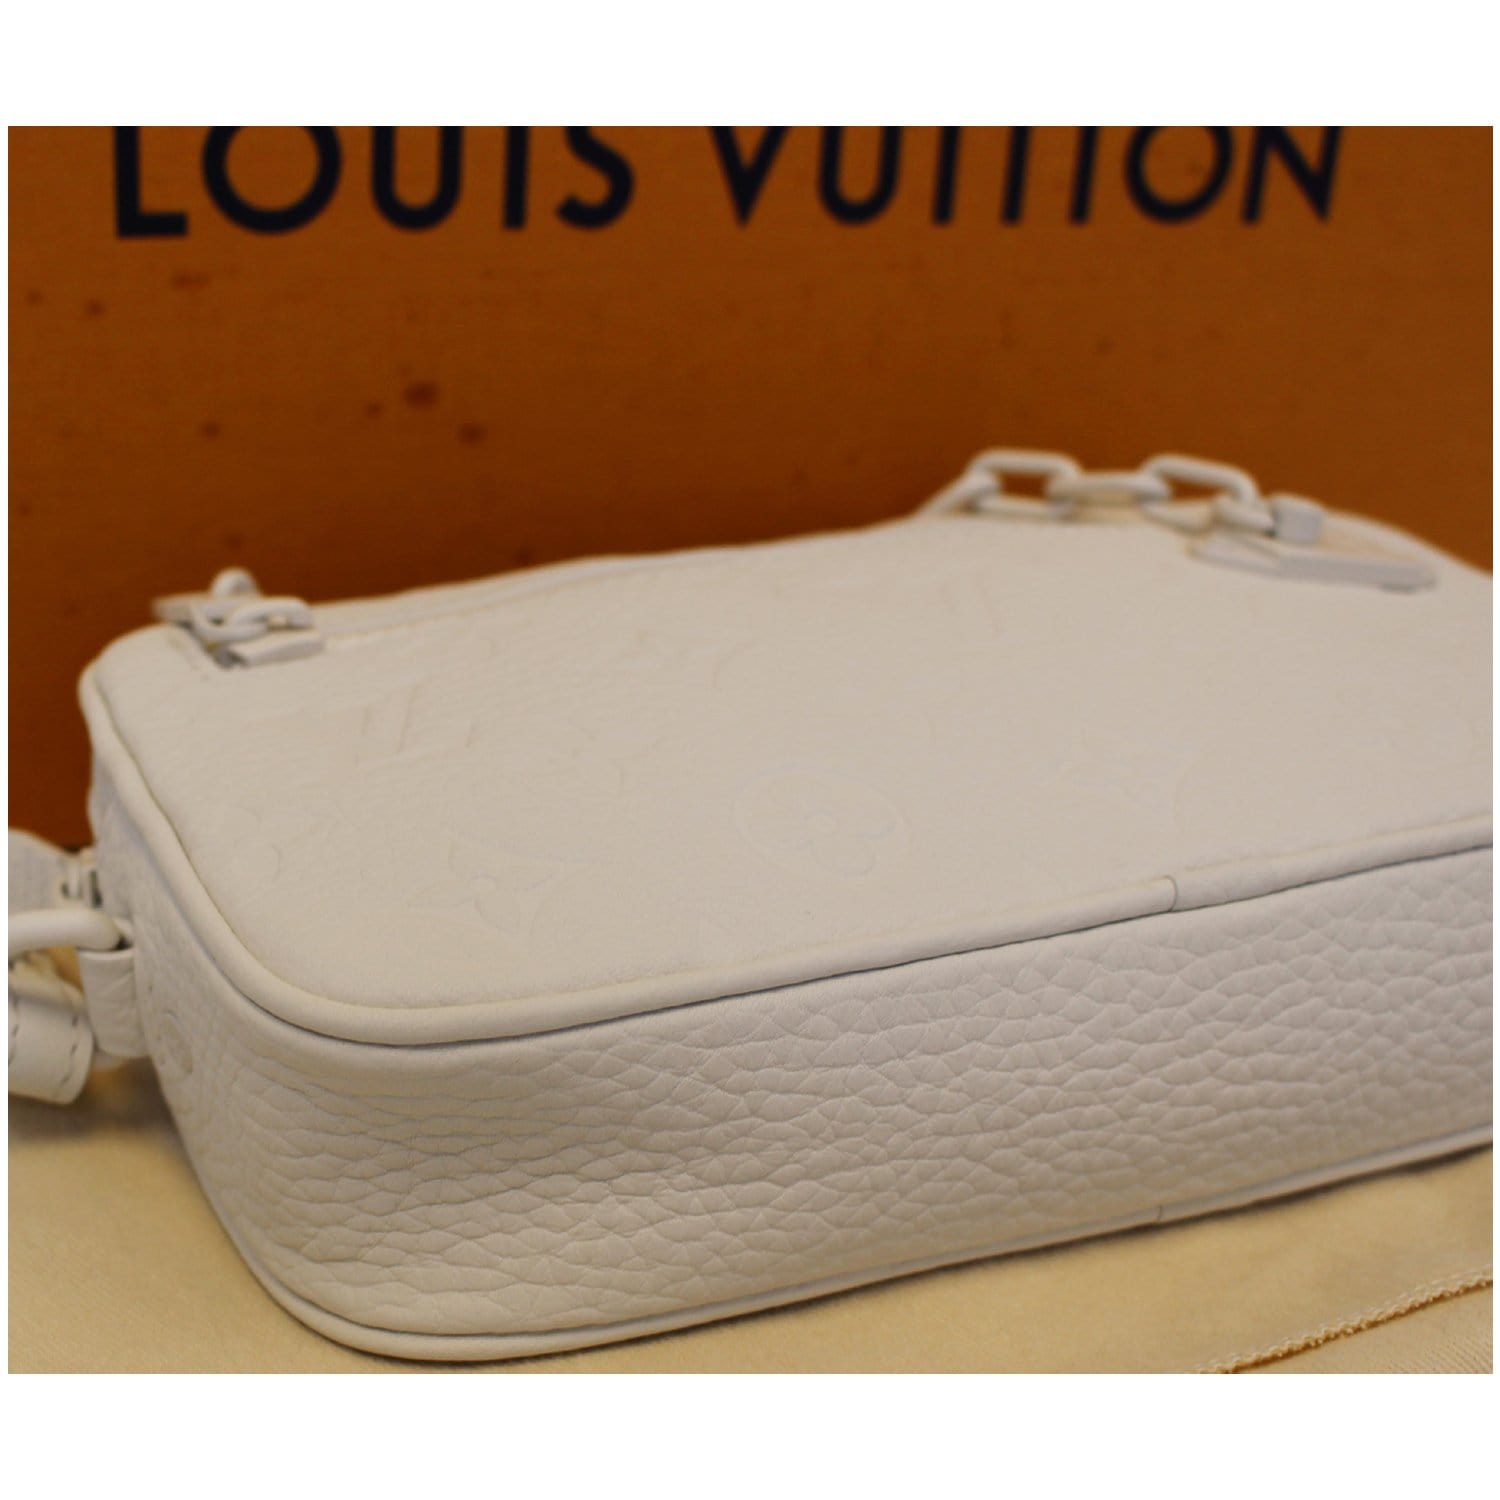 Louis Vuitton Pochette Volga Powder White Clutch Bag M53551 Free